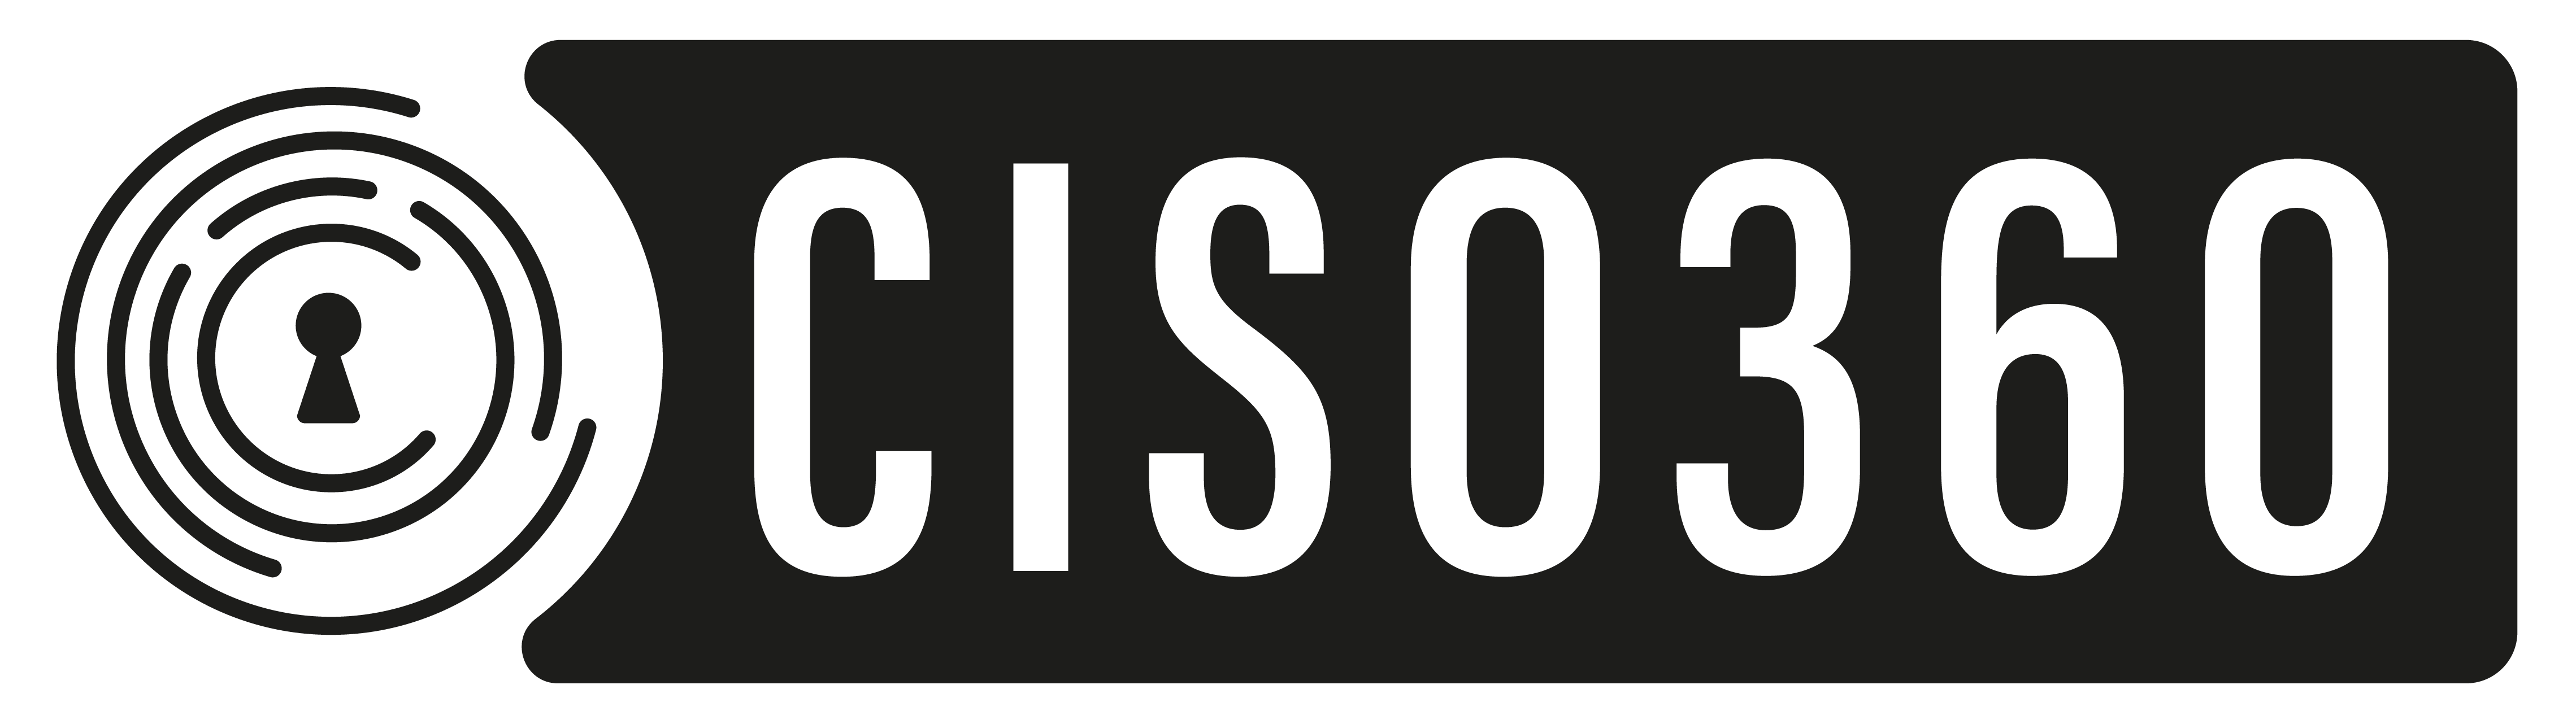 ciso360